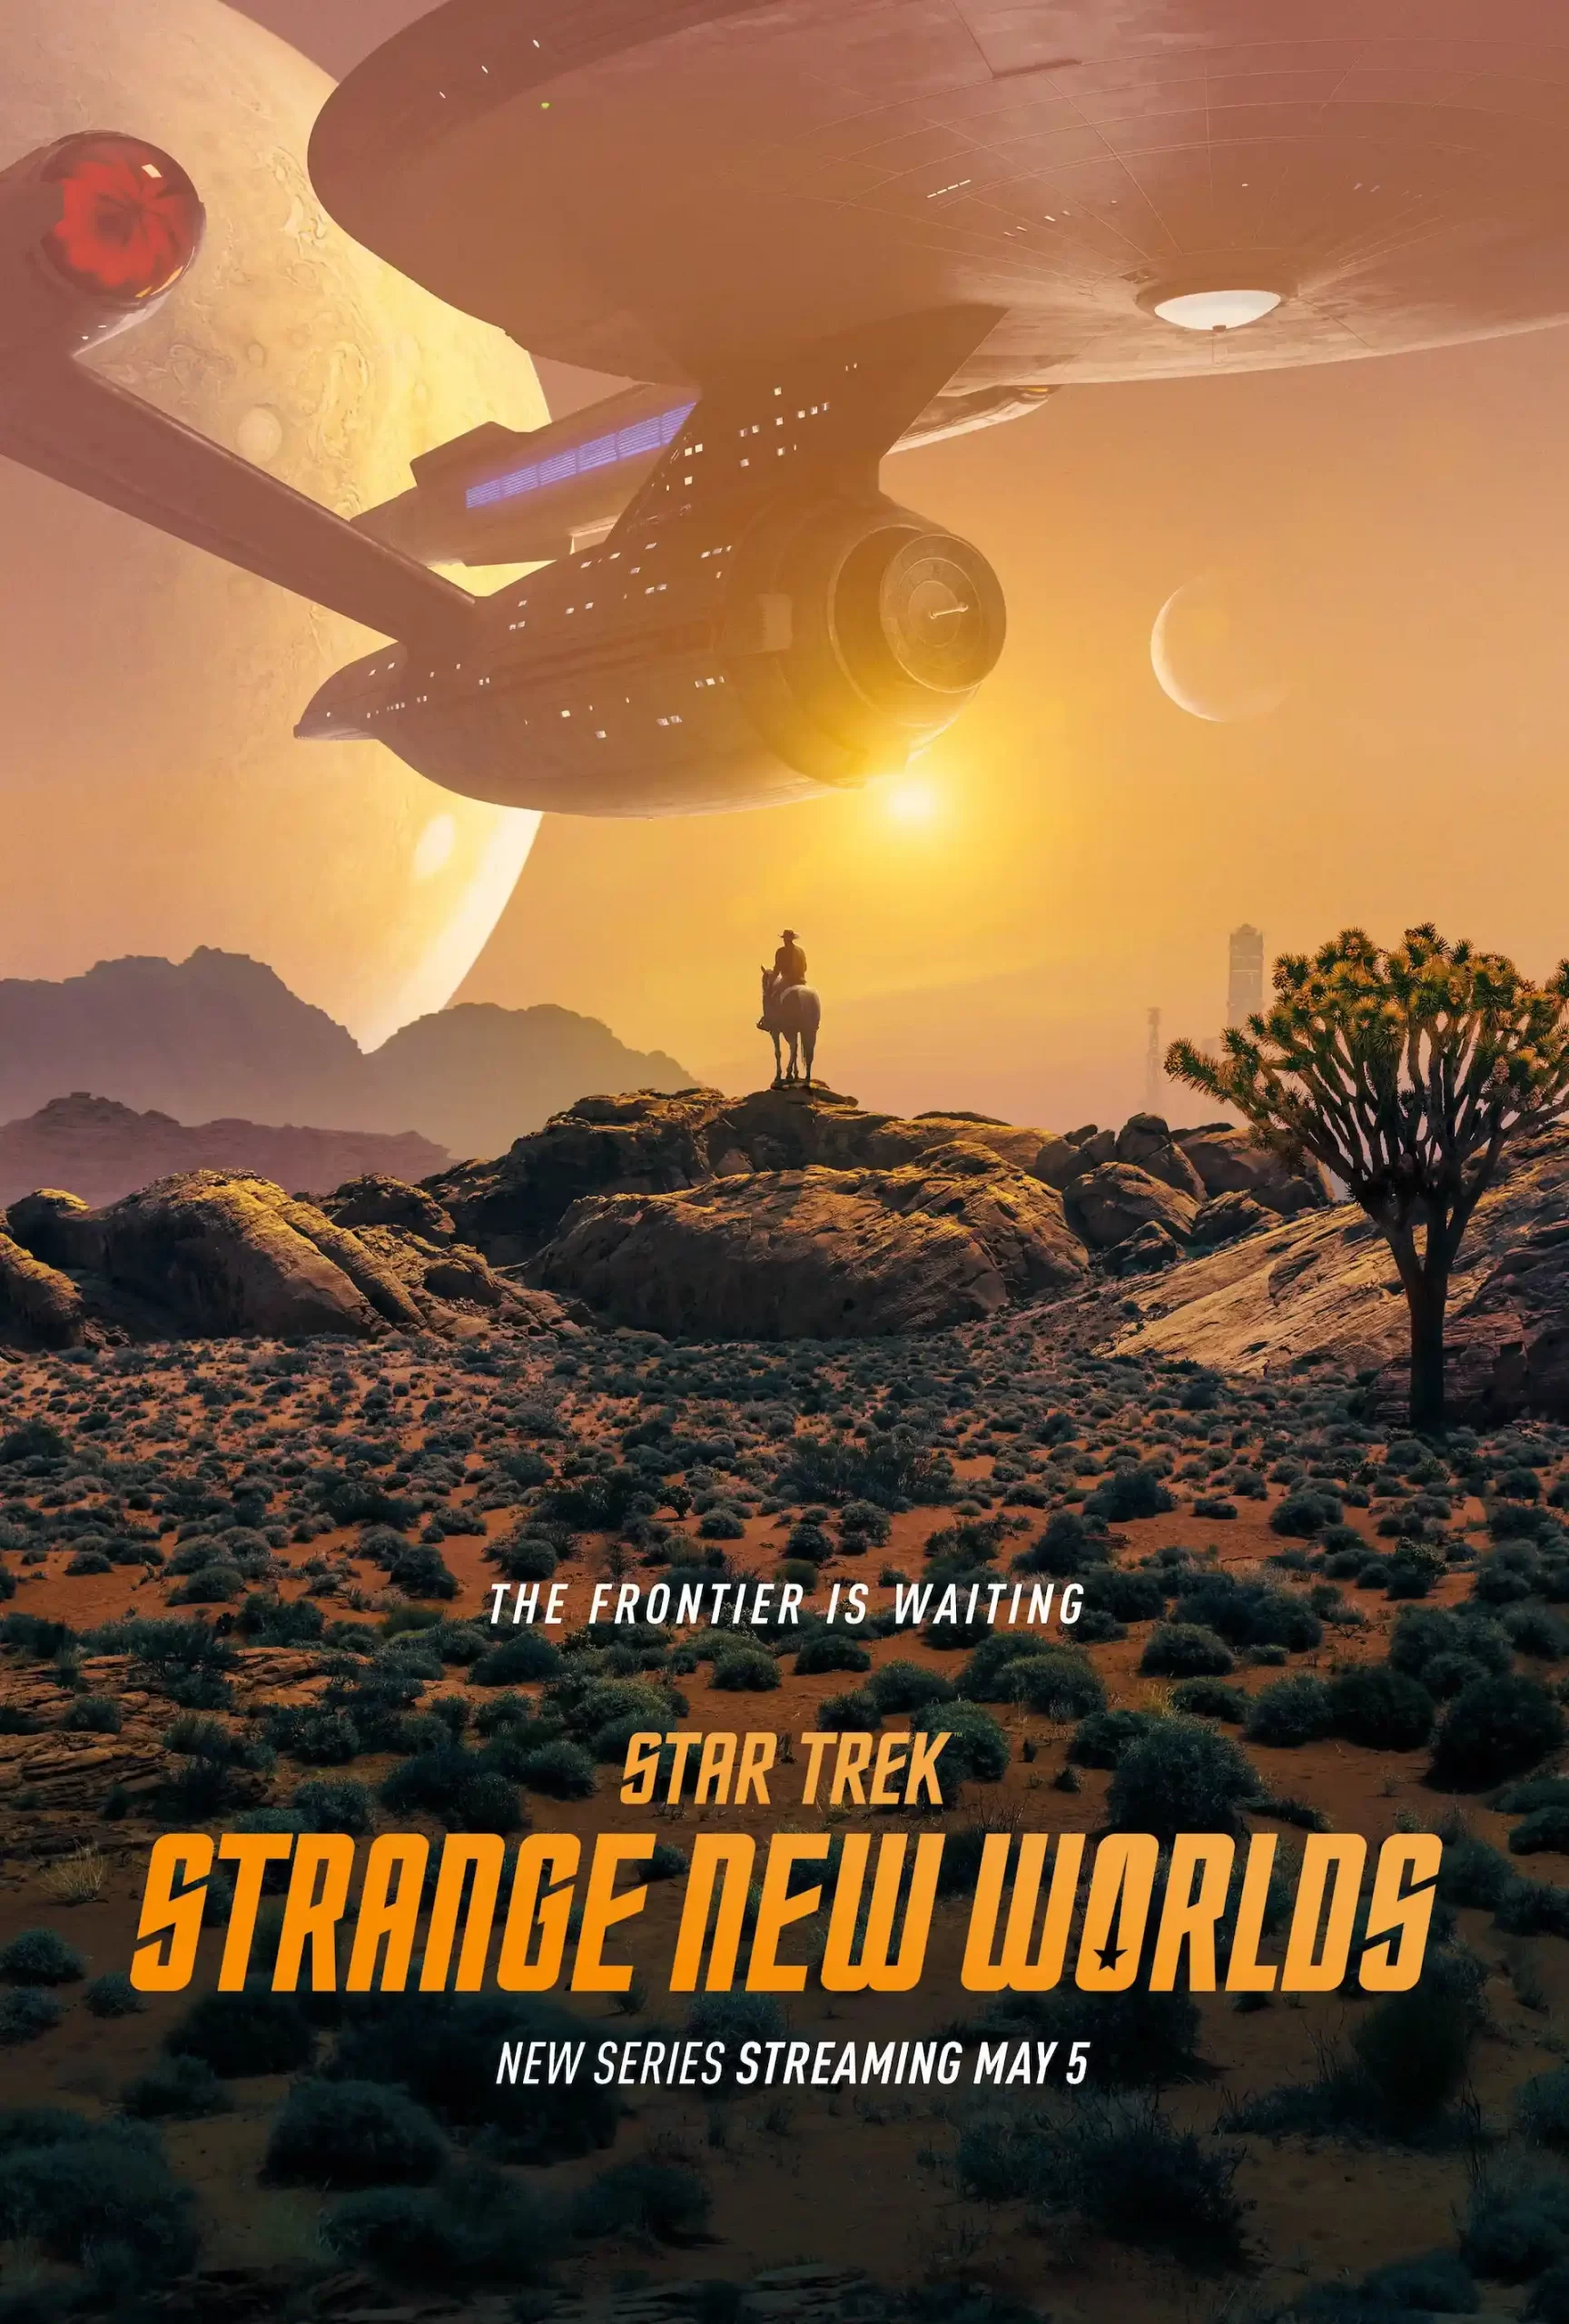 Dónde ver la nueva serie de Star Trek: Strange New Worlds. Fecha estreno